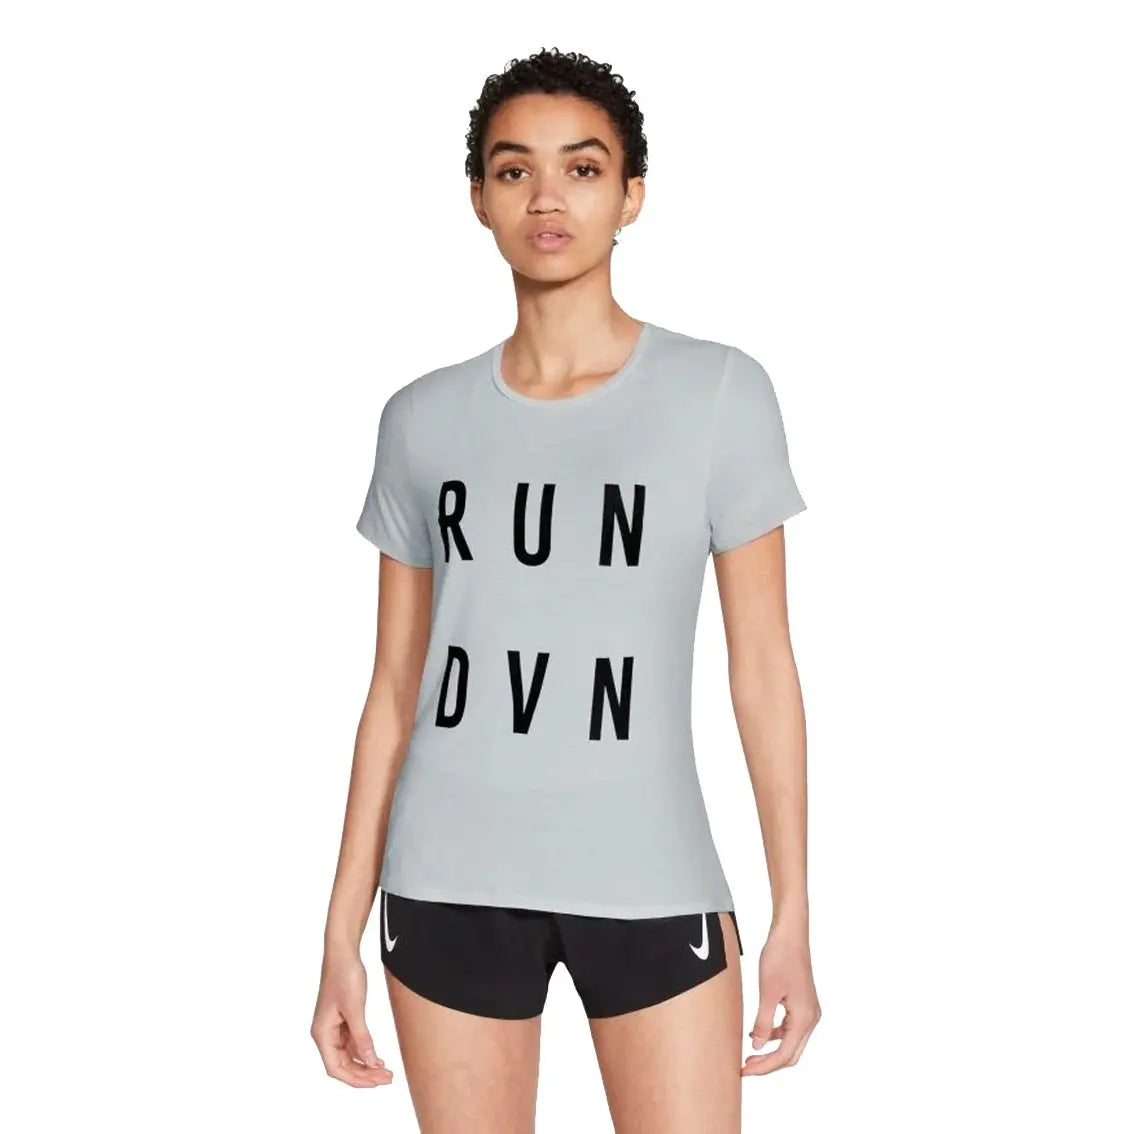 Womens Nike Run Division City Sleek Short Sleeve Top - Grey